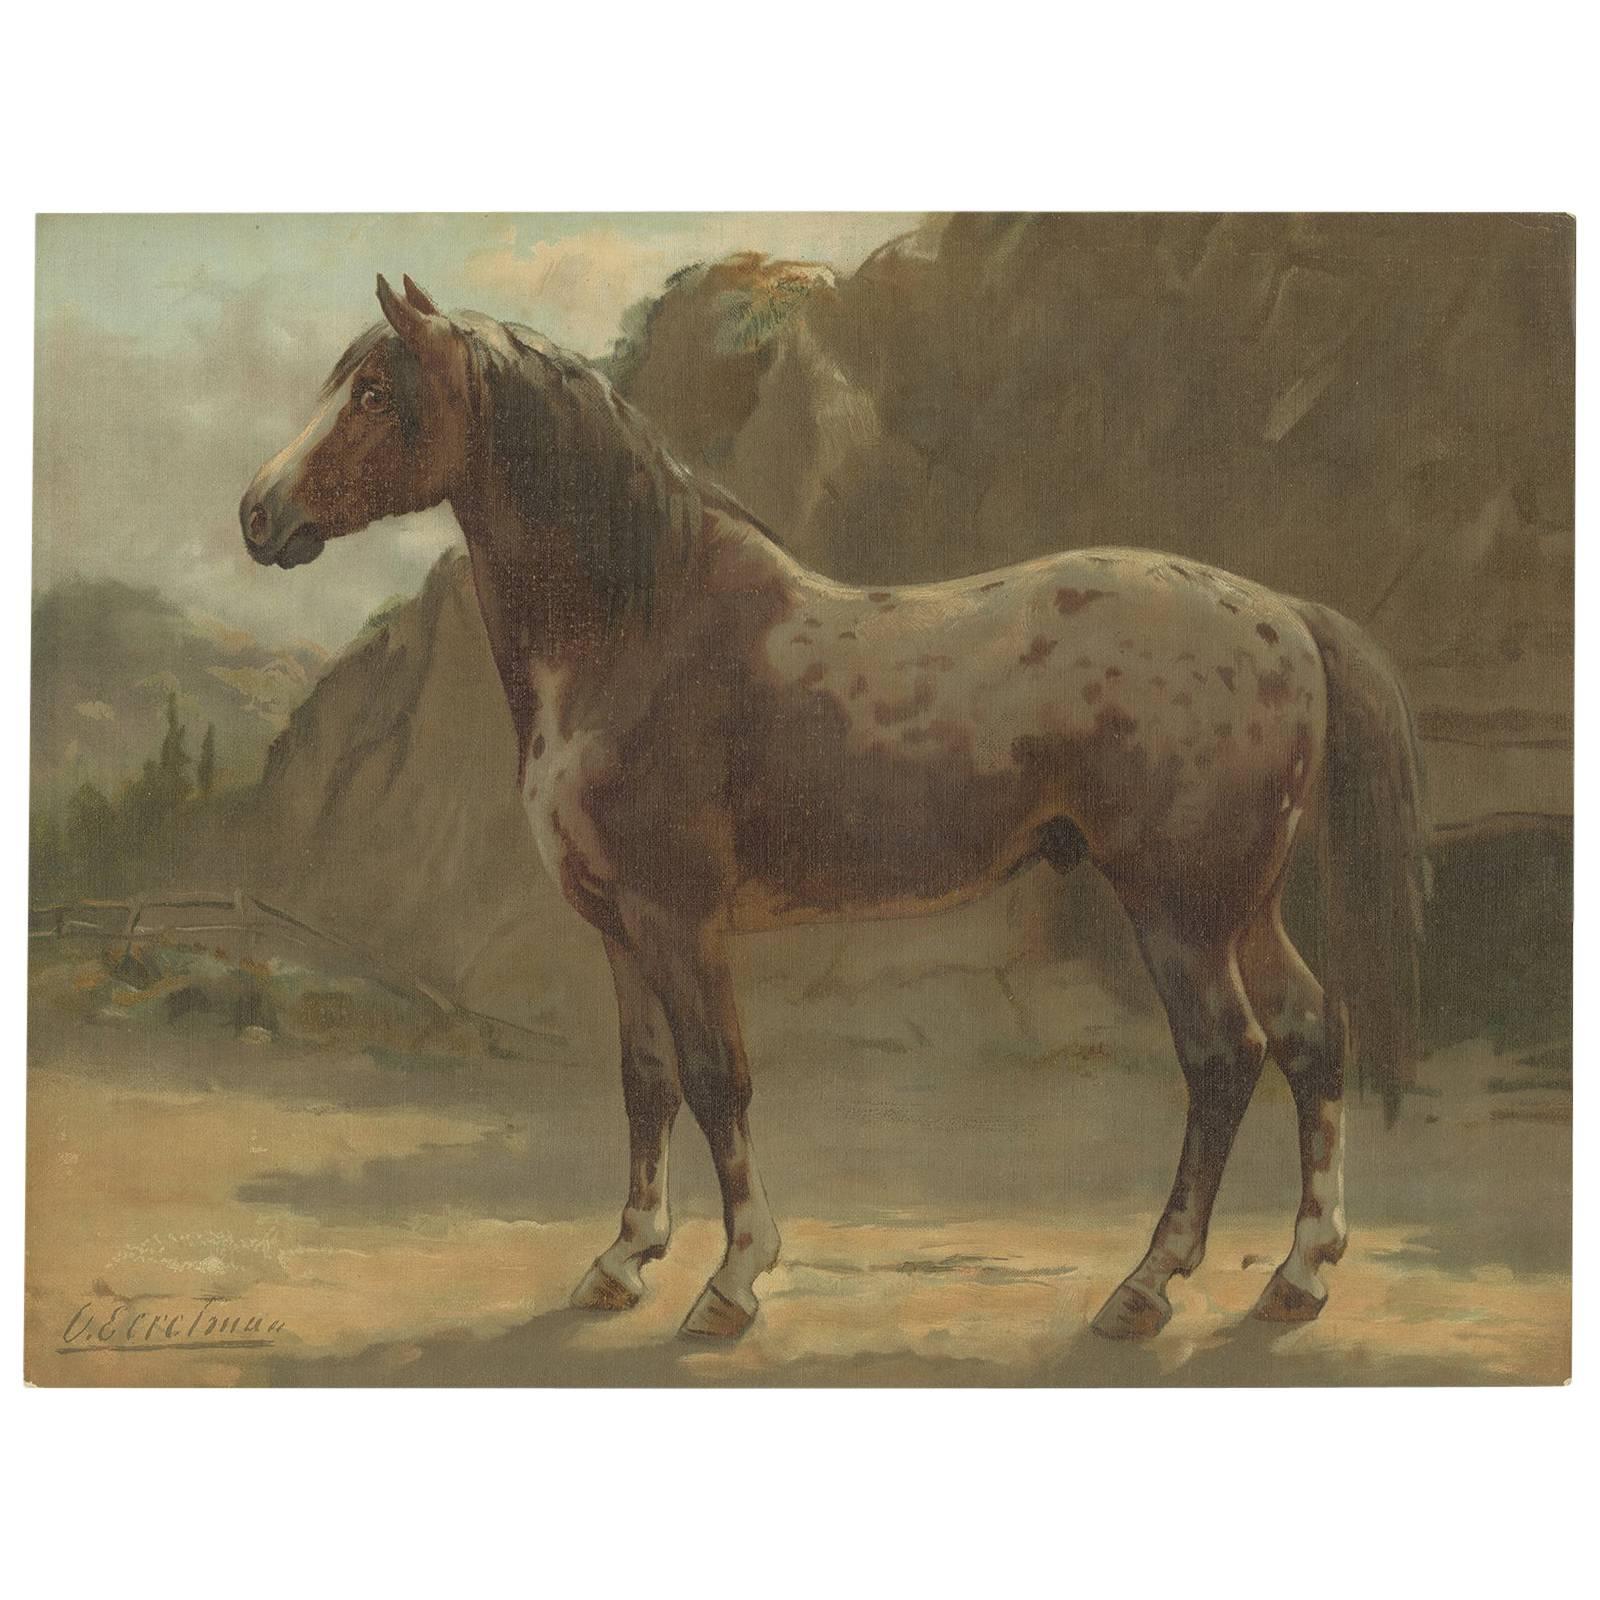 Antique Print of the Pinzgauer Horse by O. Eerelman, 1898